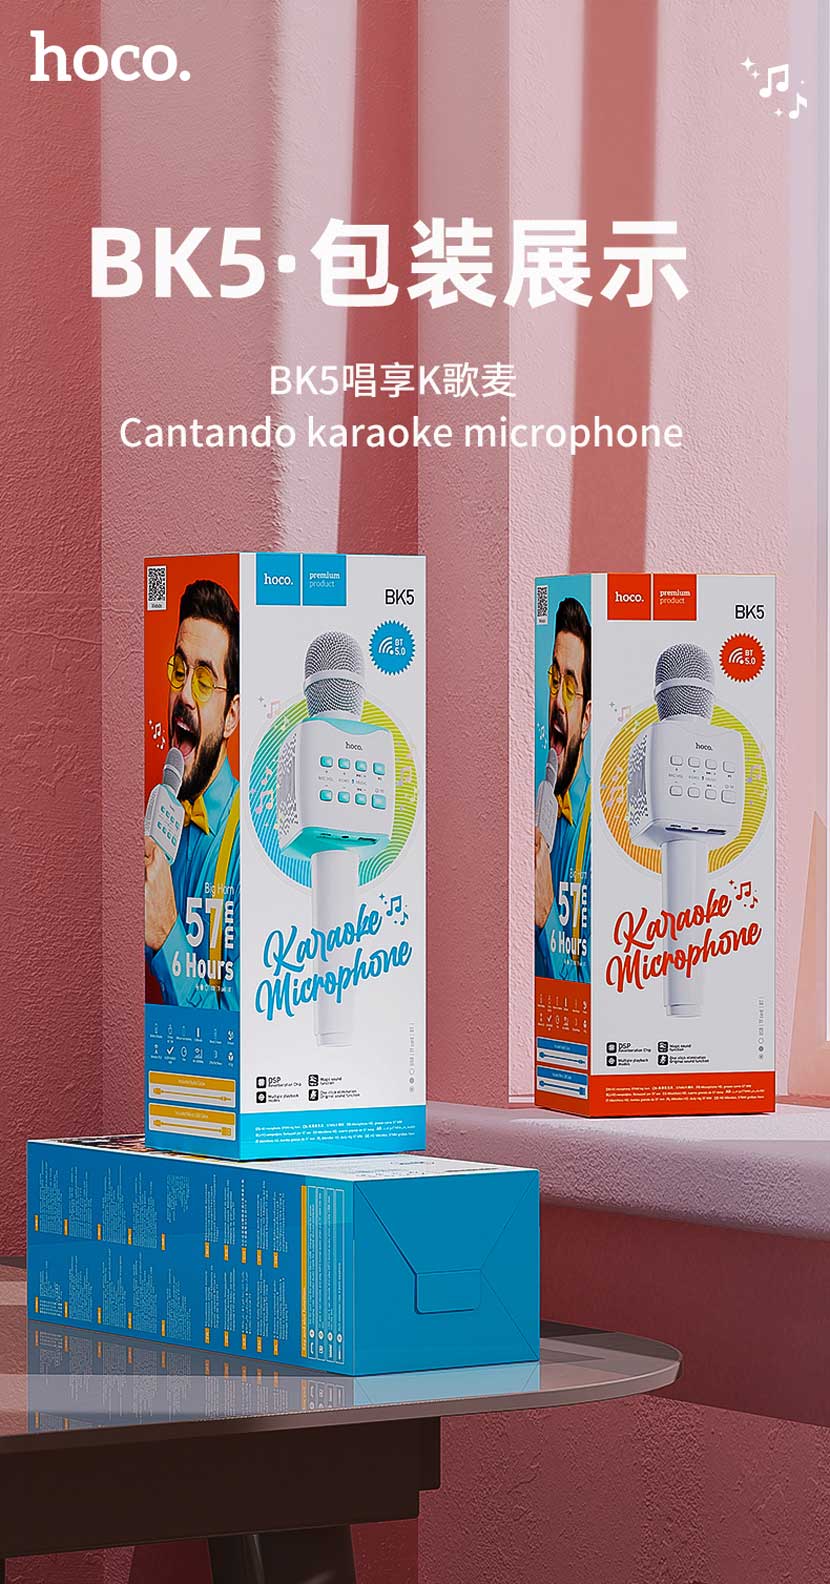 hoco news bk5 cantando karaoke microphone package cn